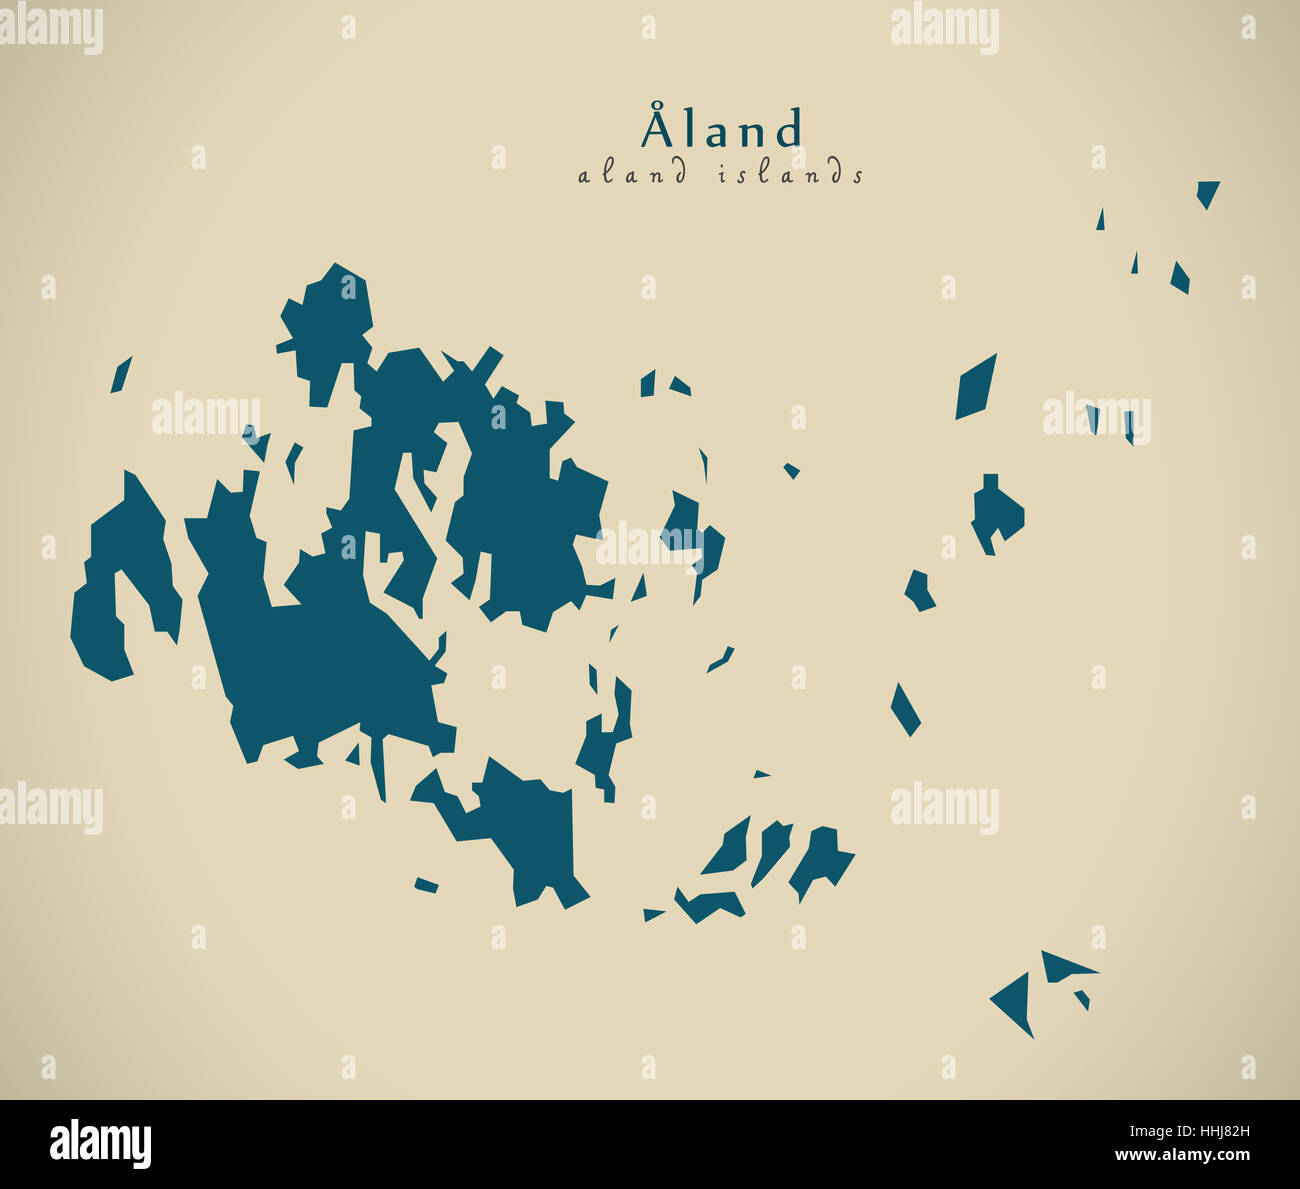 Modern Map - Aland Islands Finland FI illustration Stock Photo